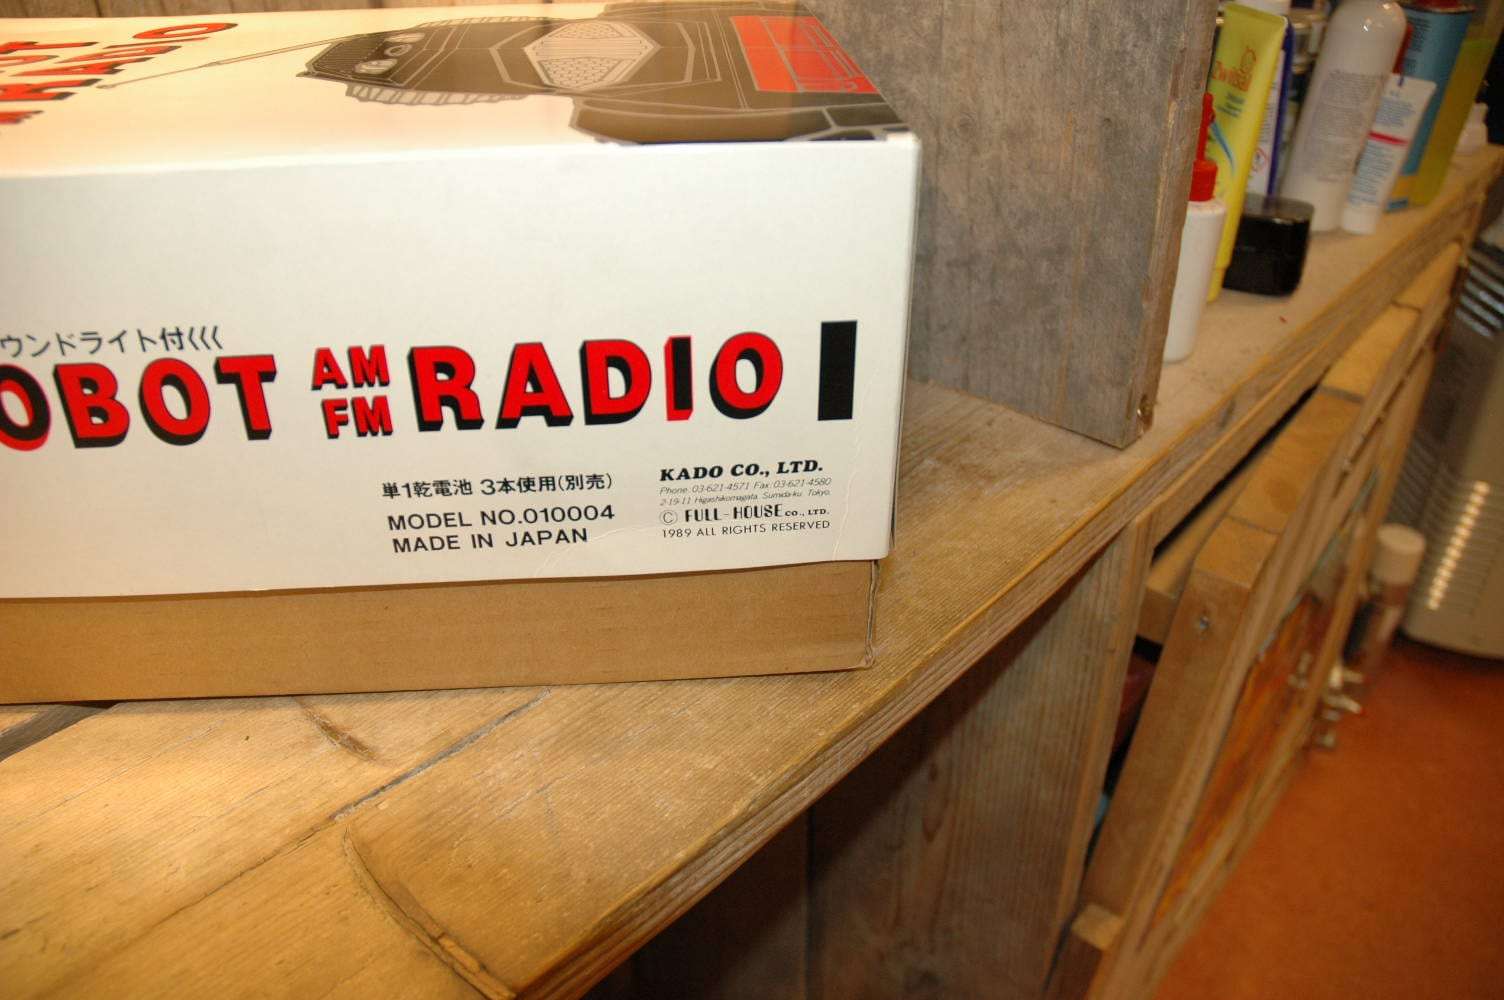 horikawa - Giant Robot Radio